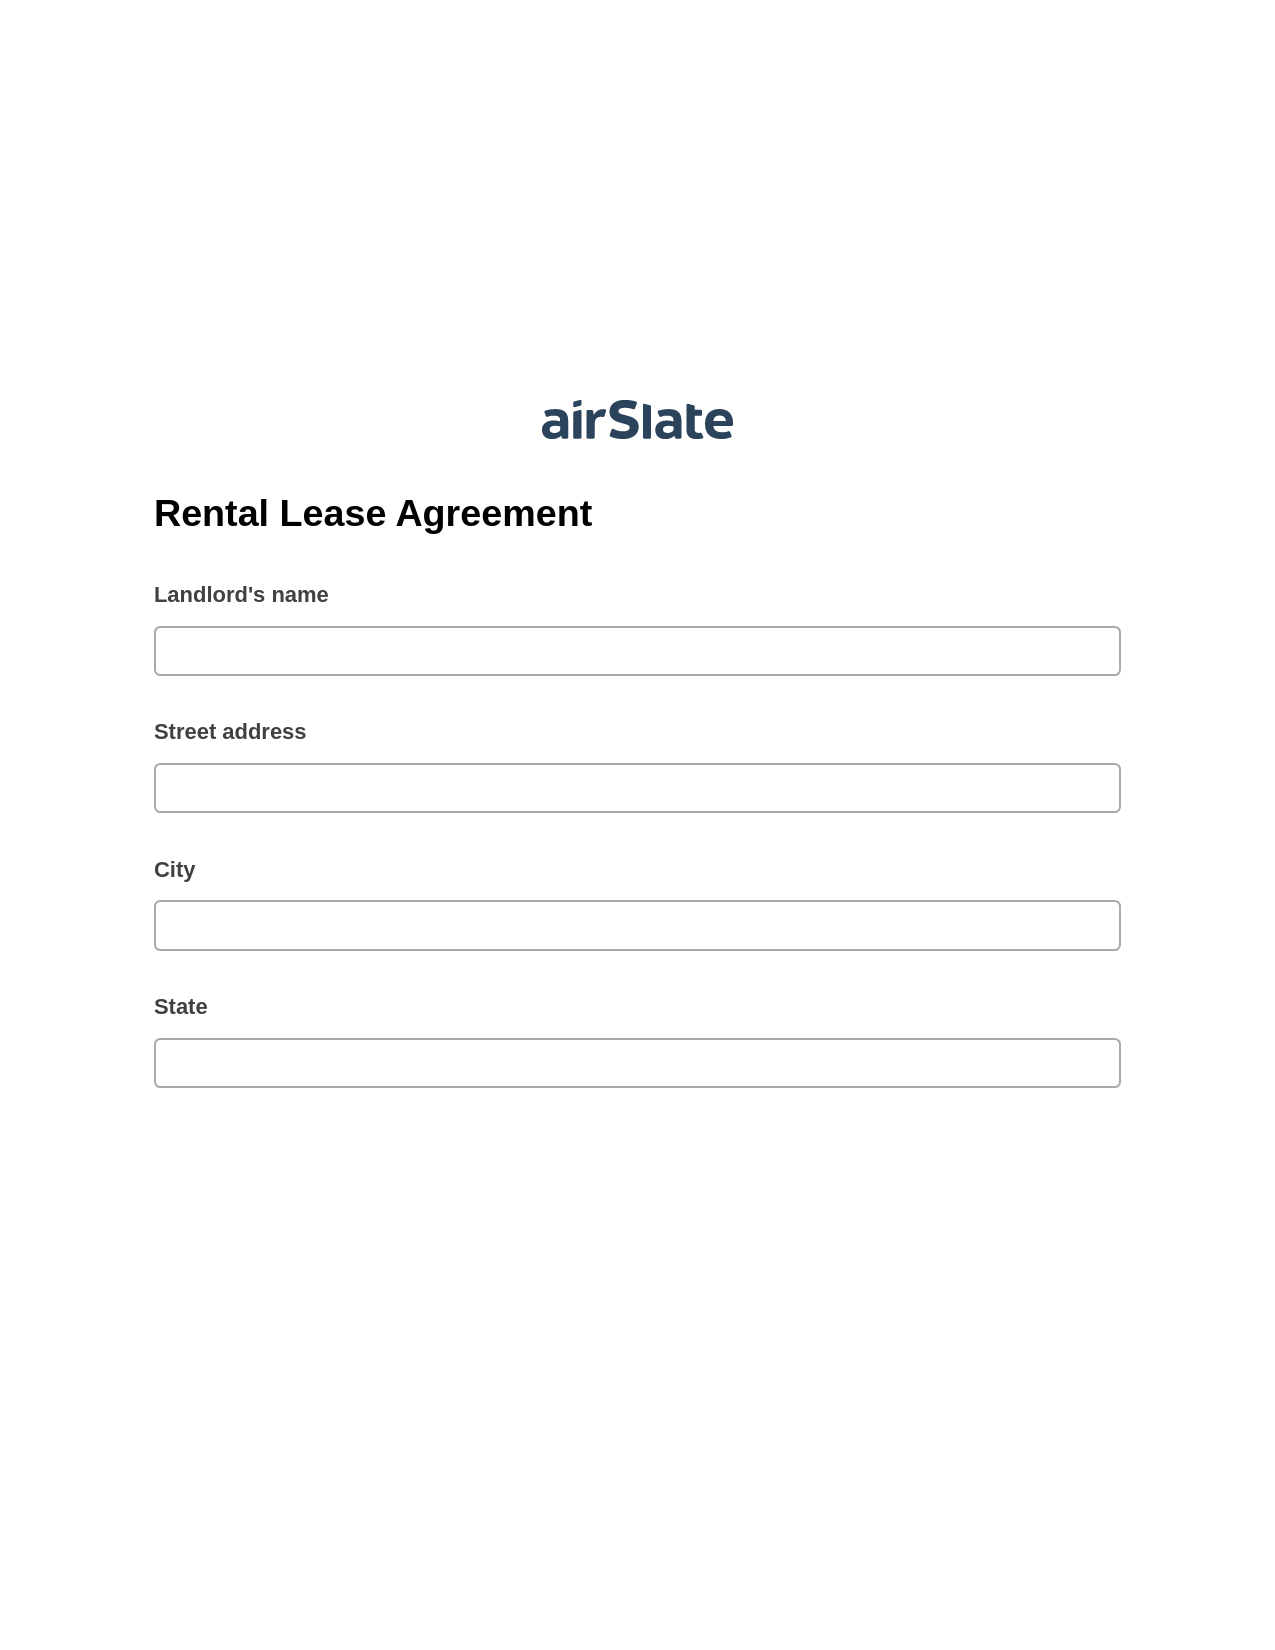 Multirole Rental Lease Agreement Pre-fill from Google Sheet Dropdown Options Bot, Jira Bot, Dropbox Bot